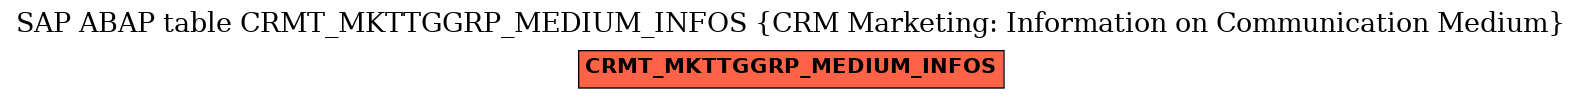 E-R Diagram for table CRMT_MKTTGGRP_MEDIUM_INFOS (CRM Marketing: Information on Communication Medium)